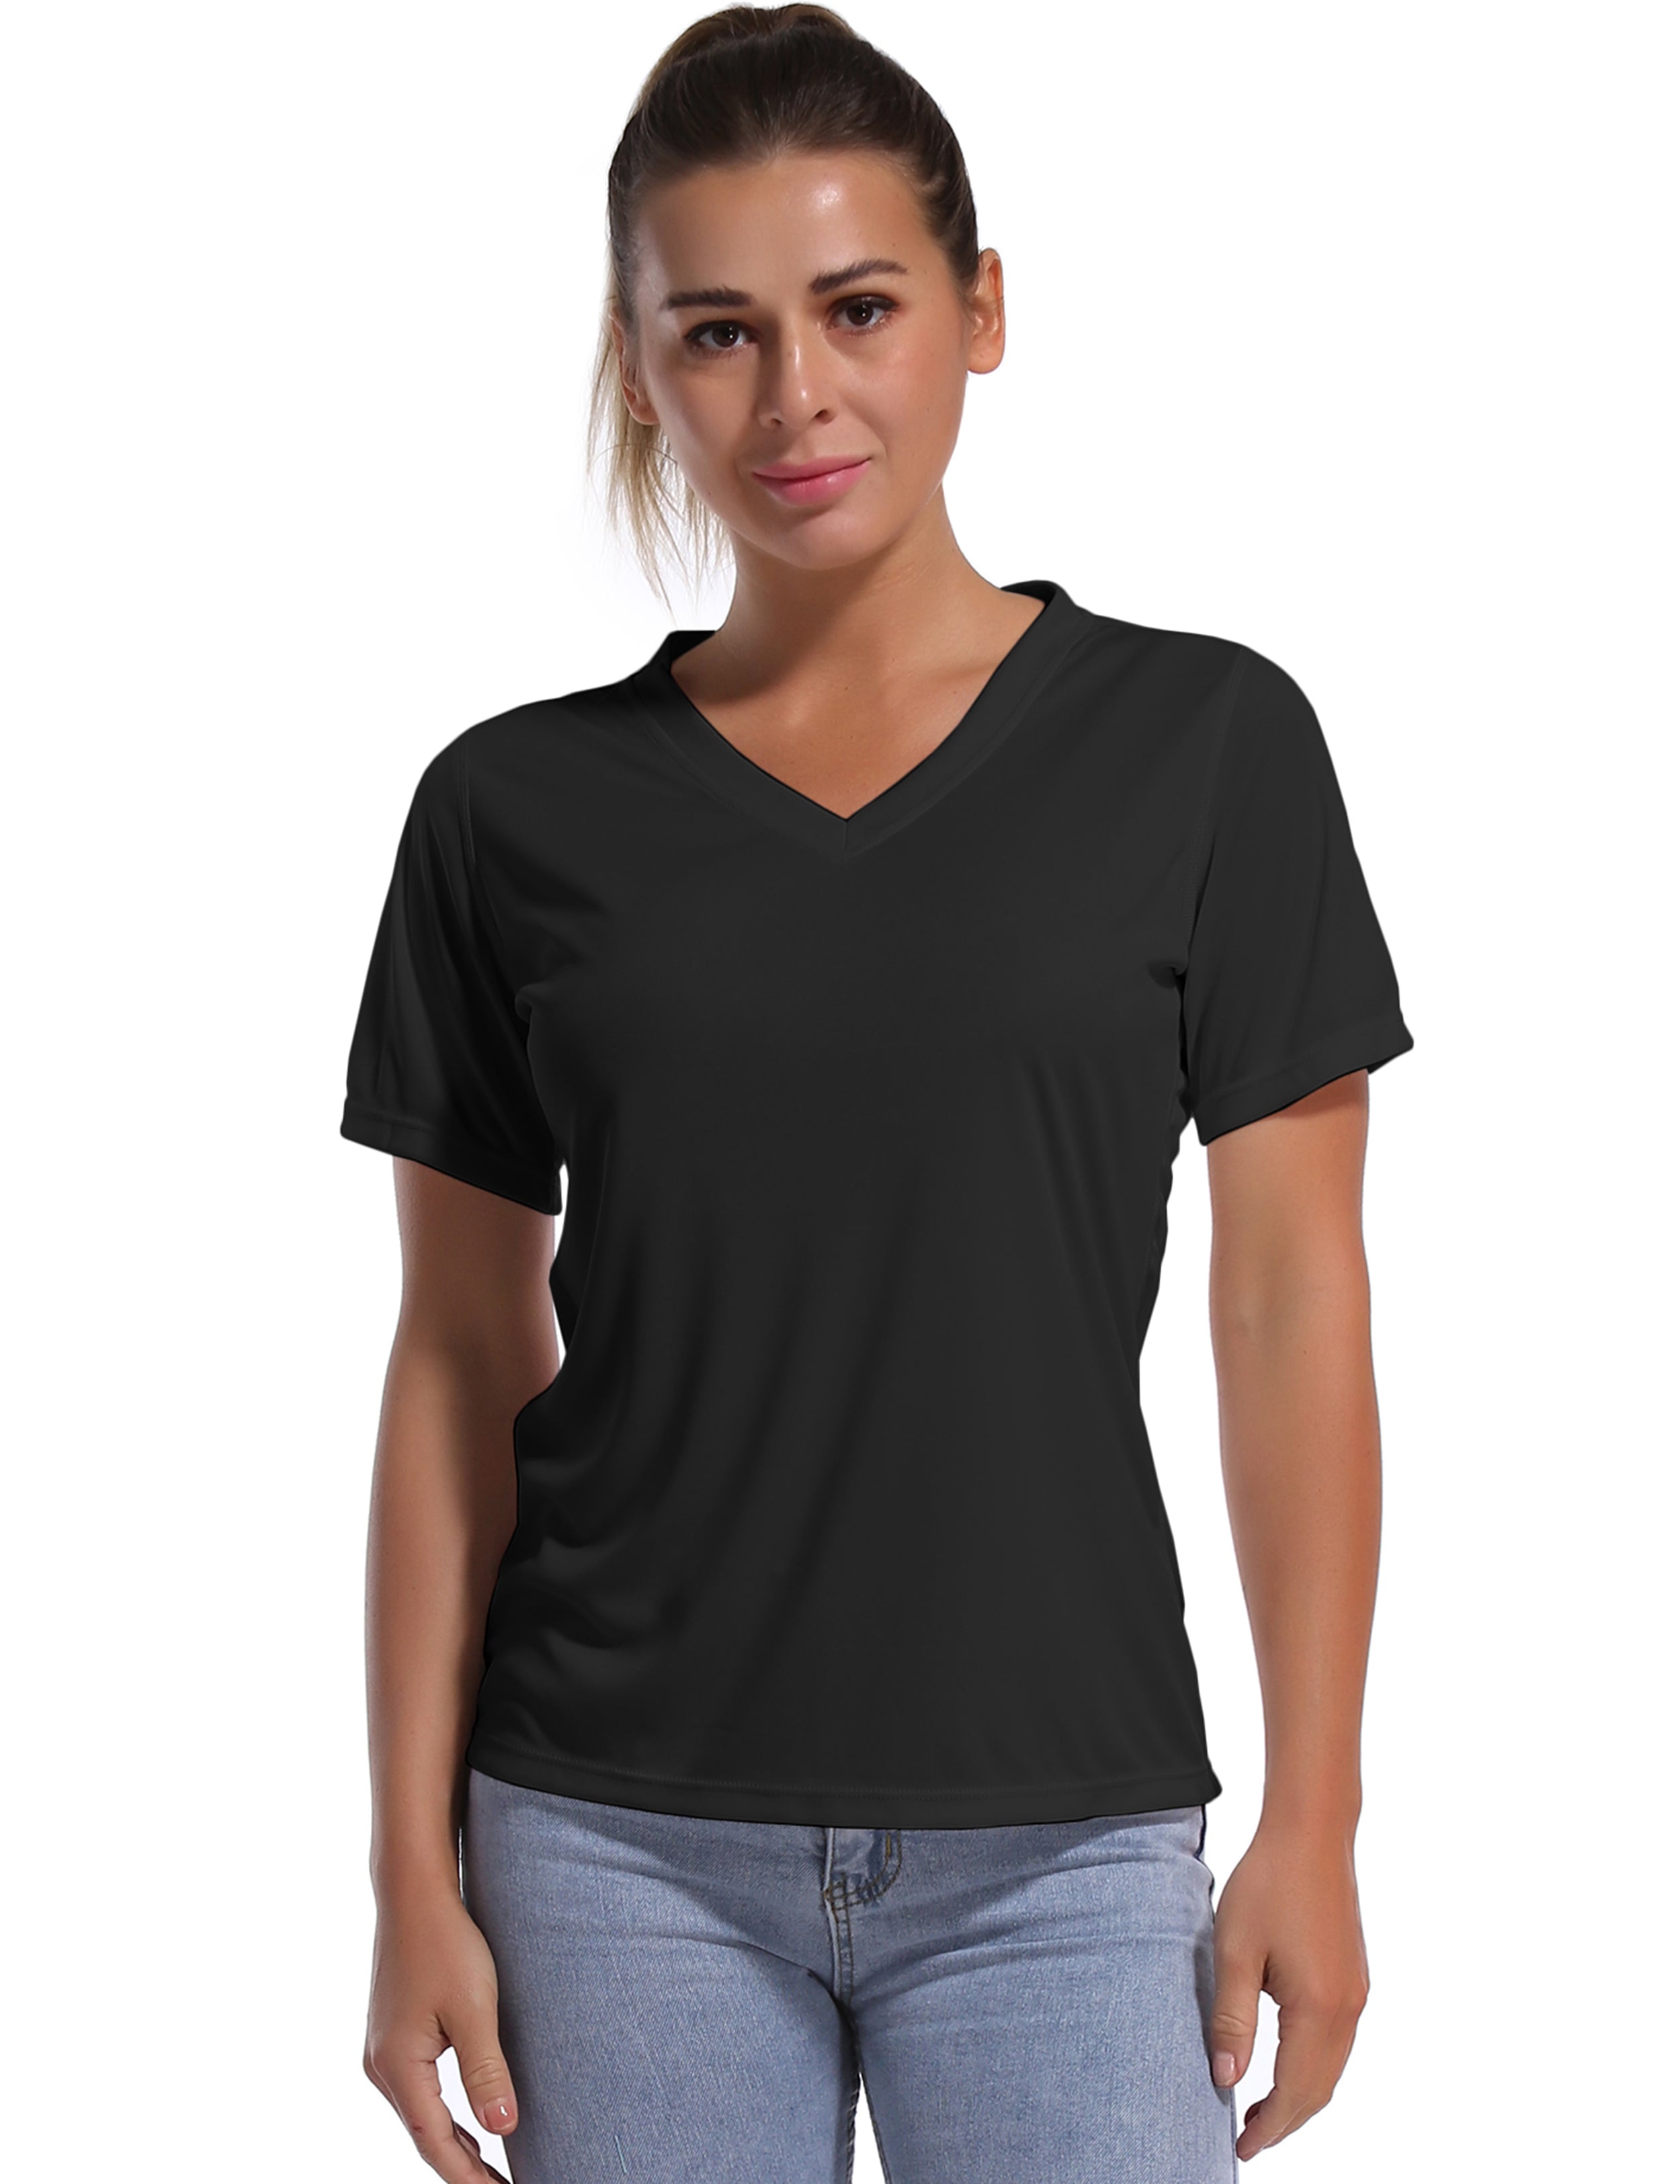 V-Neck Short Sleeve Athletic Shirts black